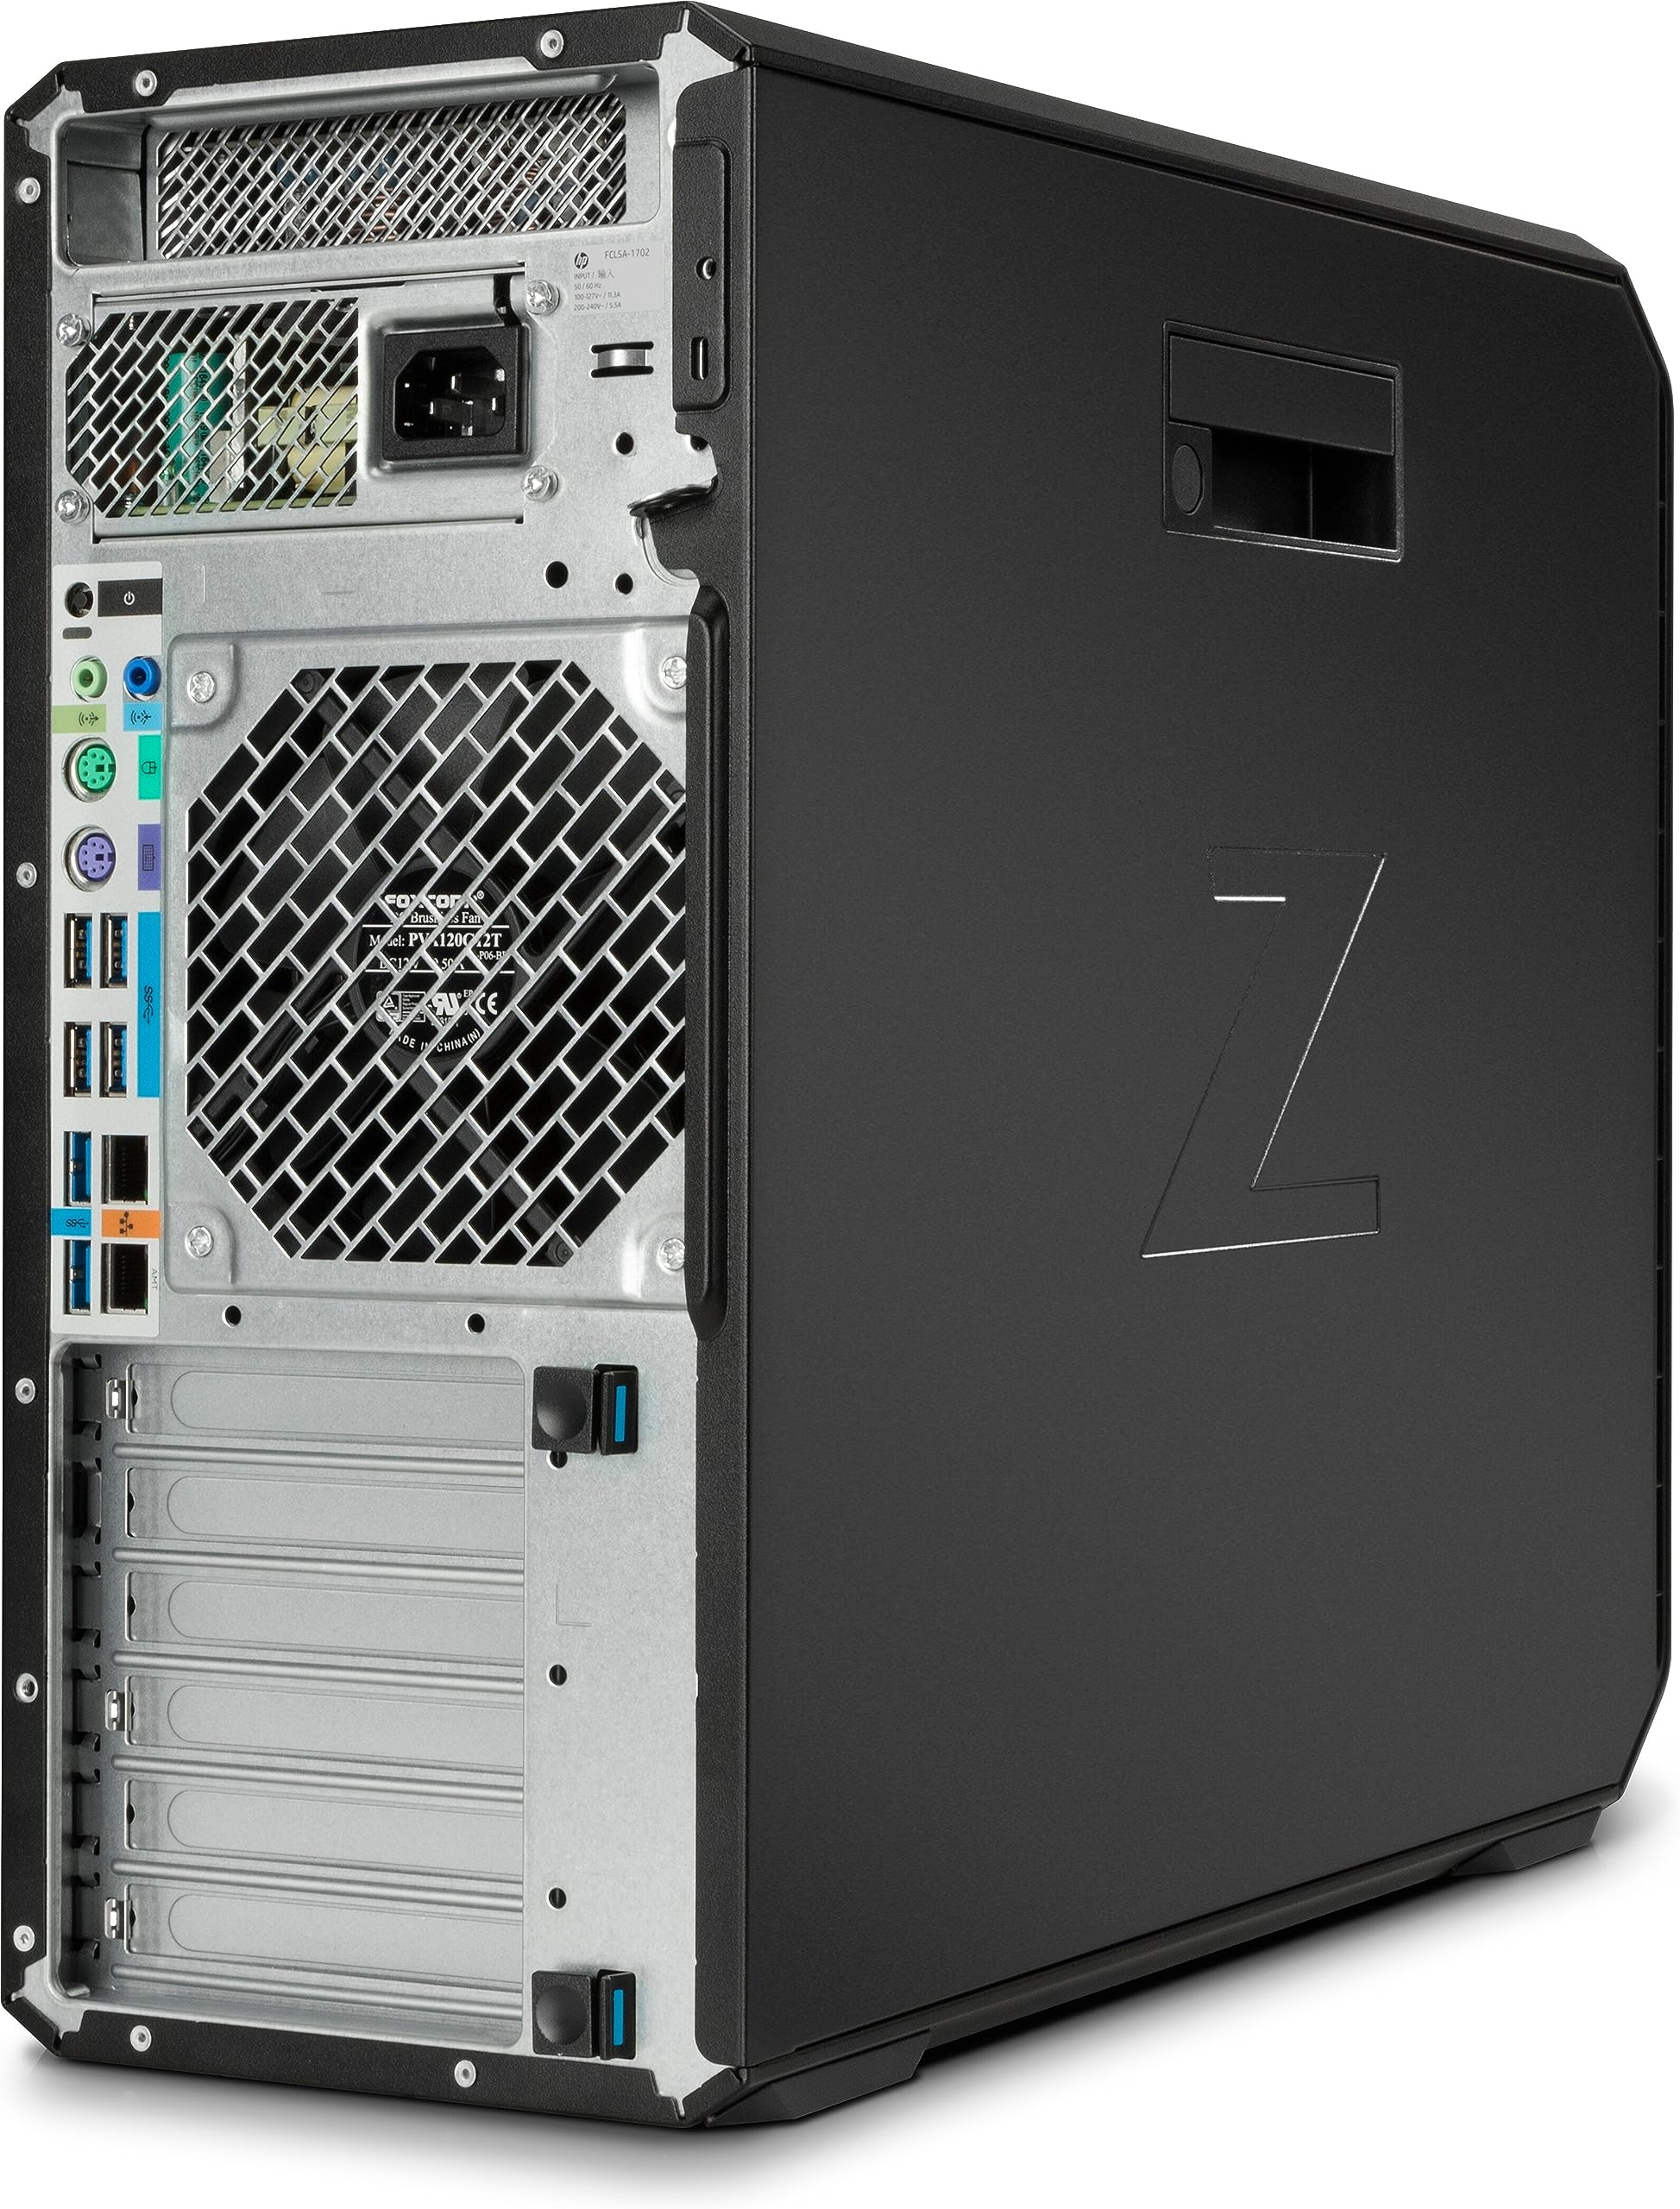 HP Z4 G4 Tower Workstation - i9-10920X (12 Cores, 4.8GHz), Nvidia Quadro RTX 4000 8GB, 2TB PCIe Gen 4.0 x4 NVMe, 64GB DDR4, 6TB HDD, DVD RW, GbE LAN, Windows 11 Pro (Renewed)